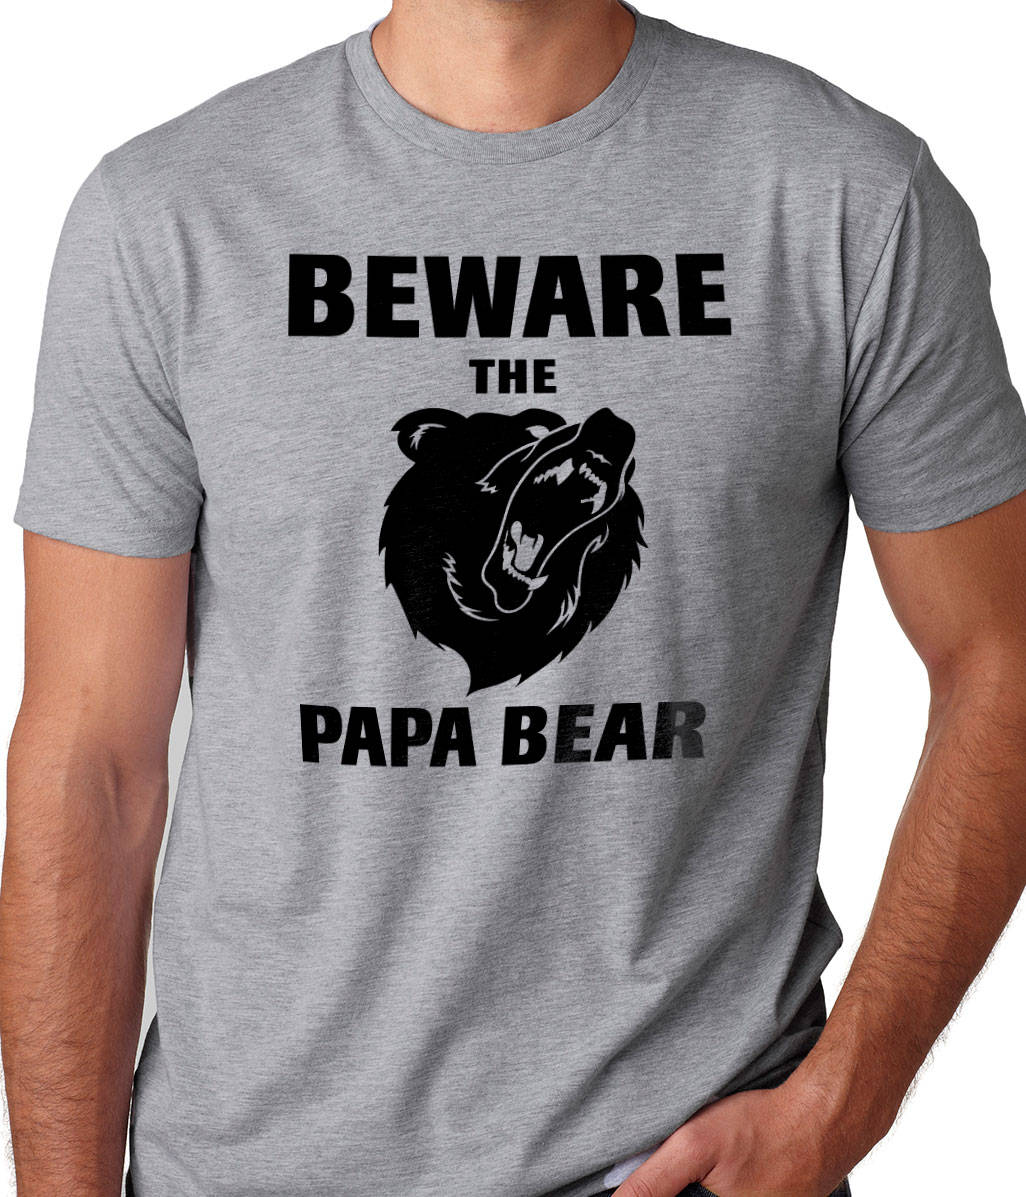 Papa Bear Shirt, Beware the Papa Bear Shirt